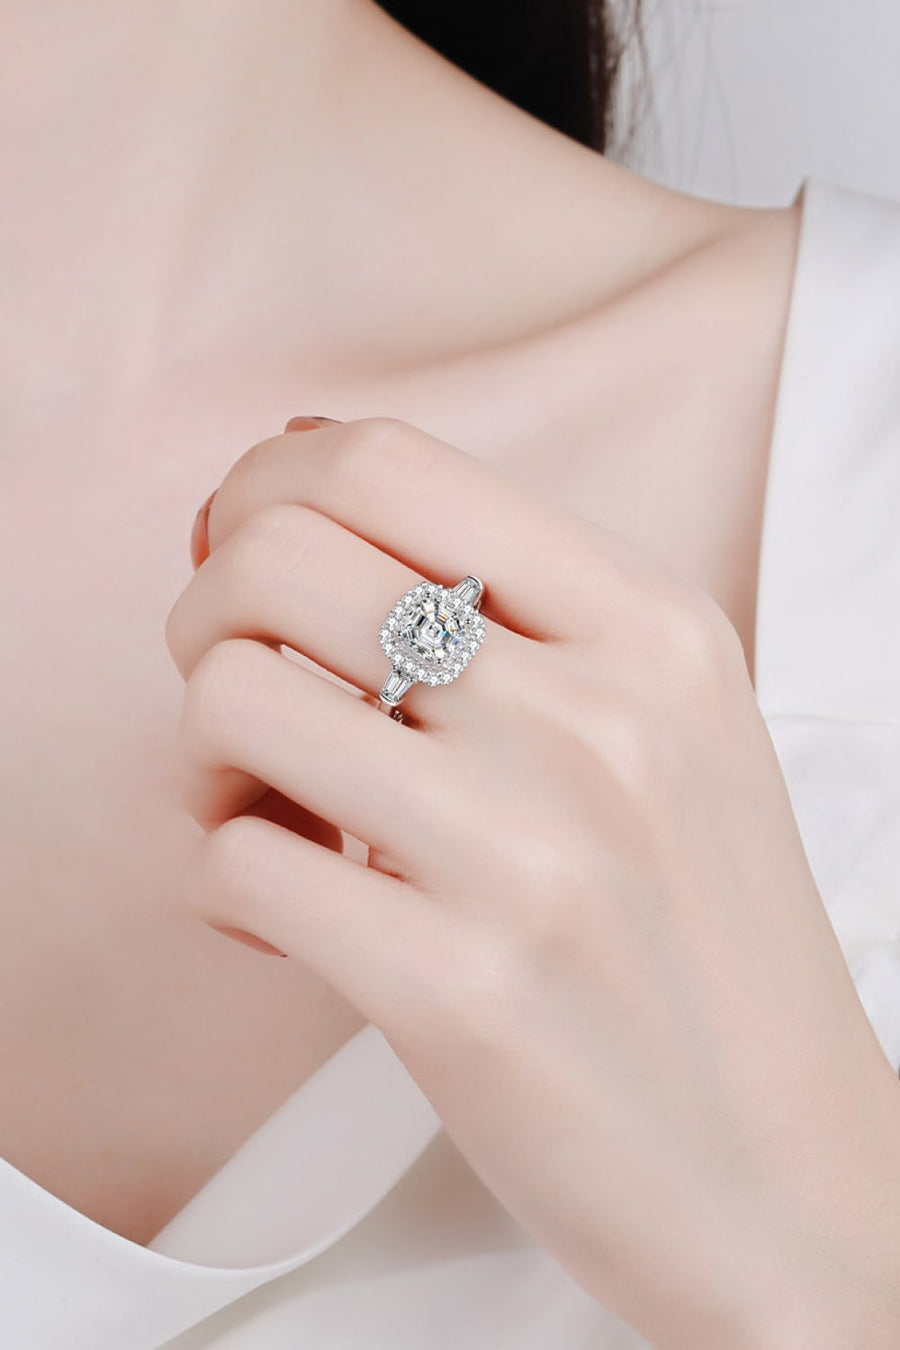 Best Diamond Ring Jewelry Gifts for Women | 2 Carat Asscher Diamond Ring - So Much Shine | MASON New York